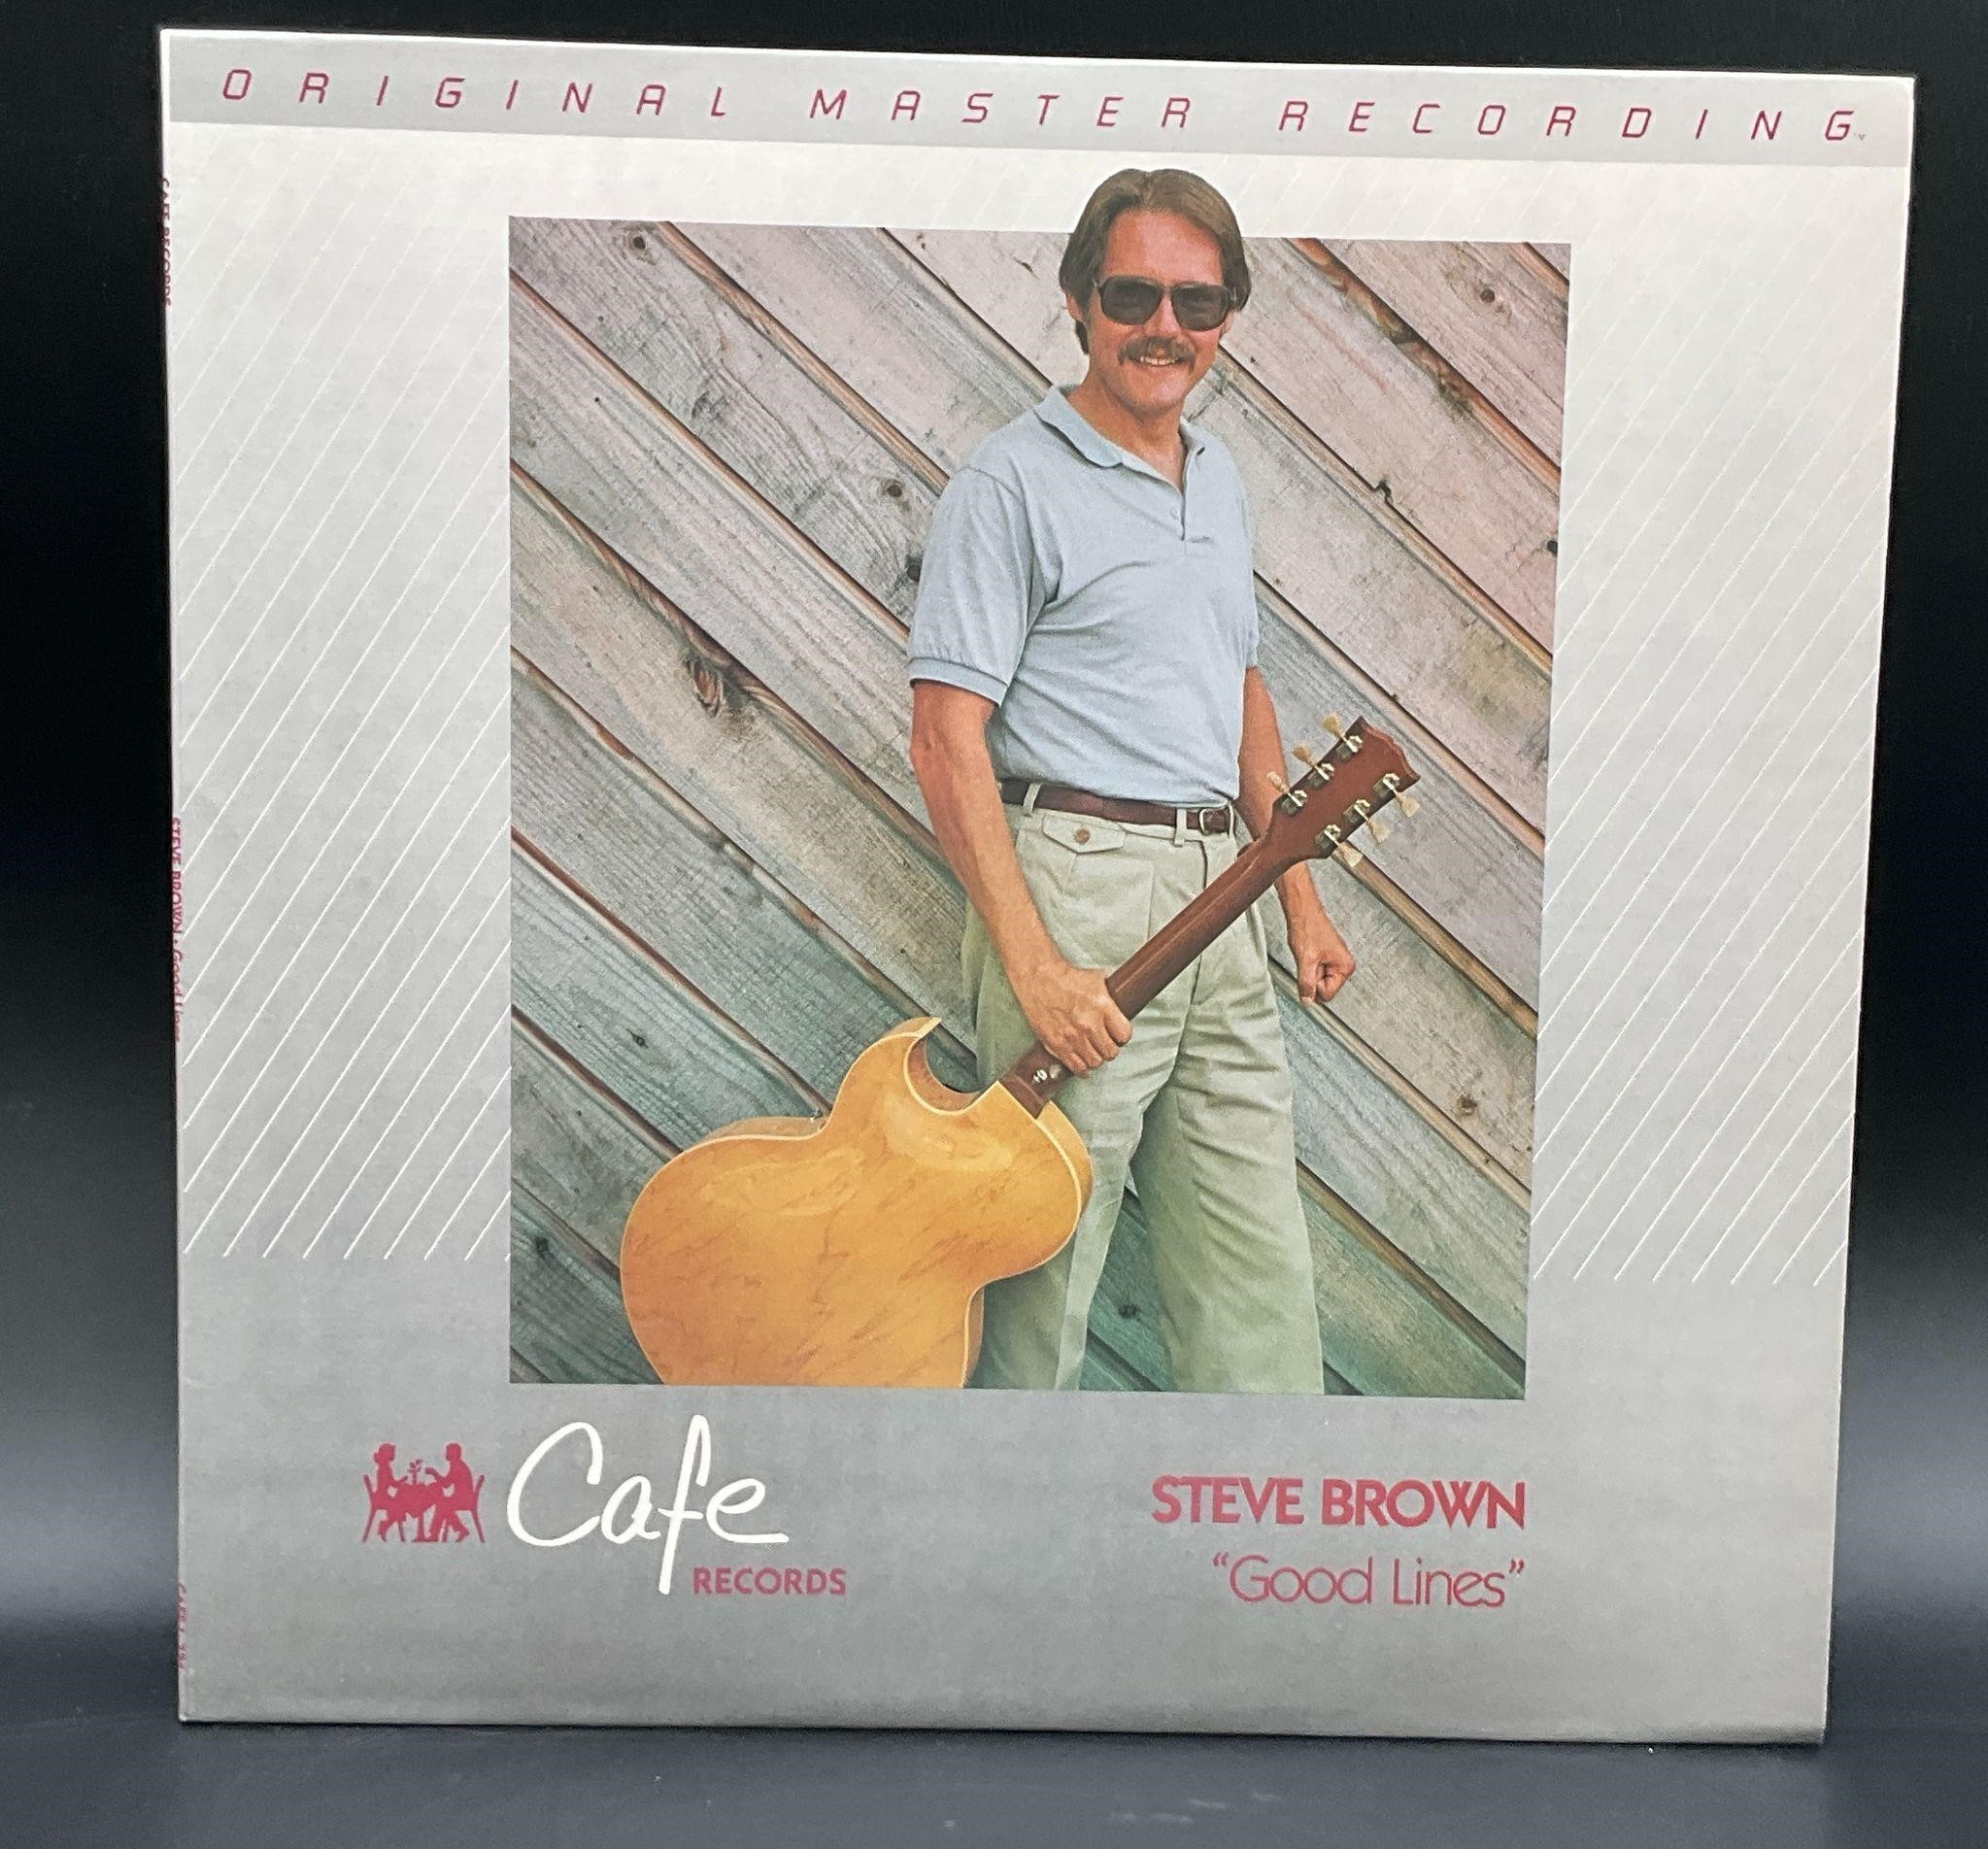 Steve Brown MFSL Original Master Recording